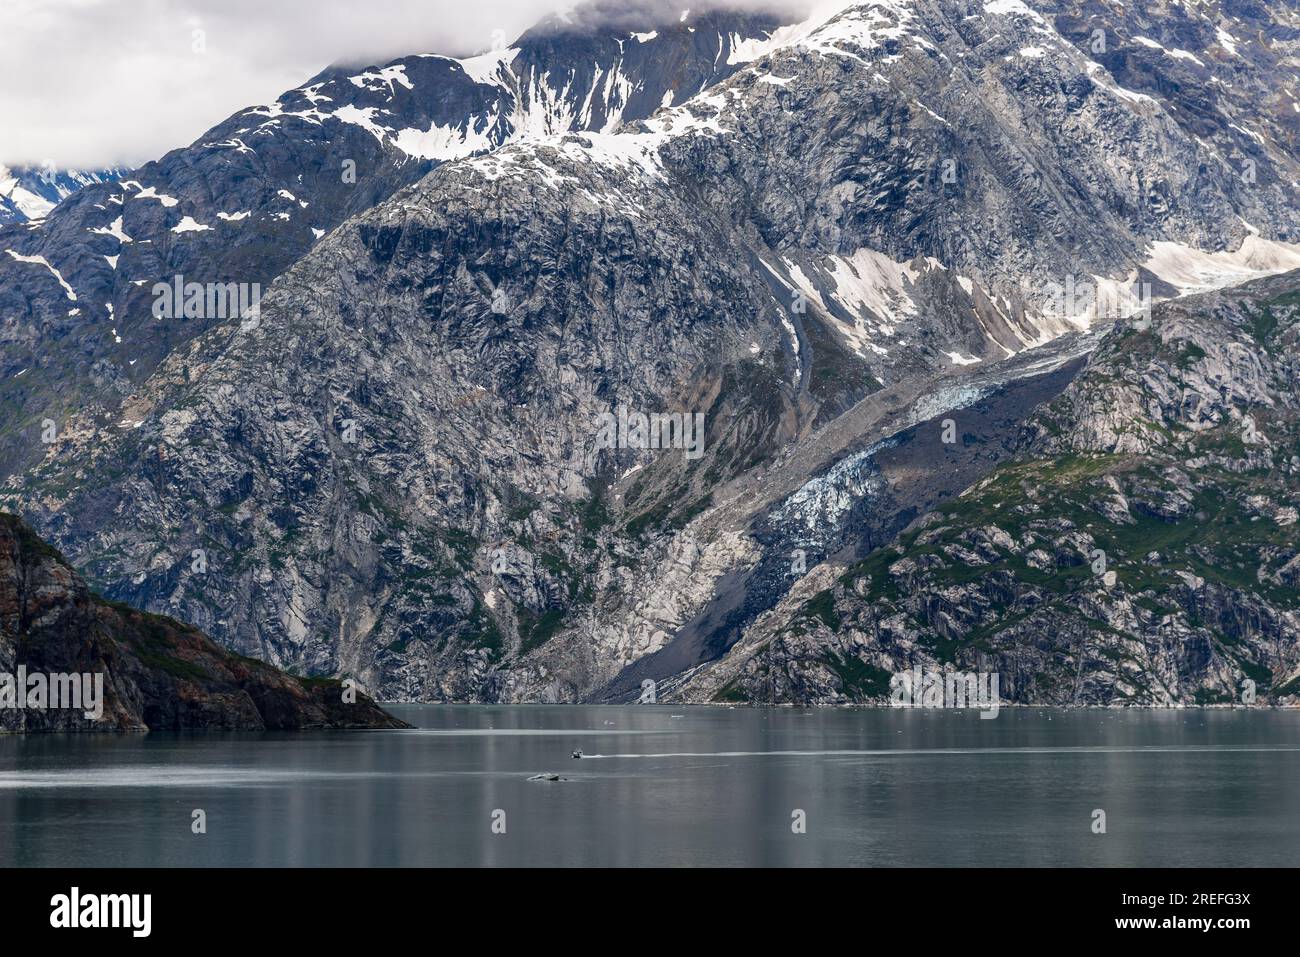 Mountains & Ocean with cloudy sky at Glacier Bay Alaska Stock Photo